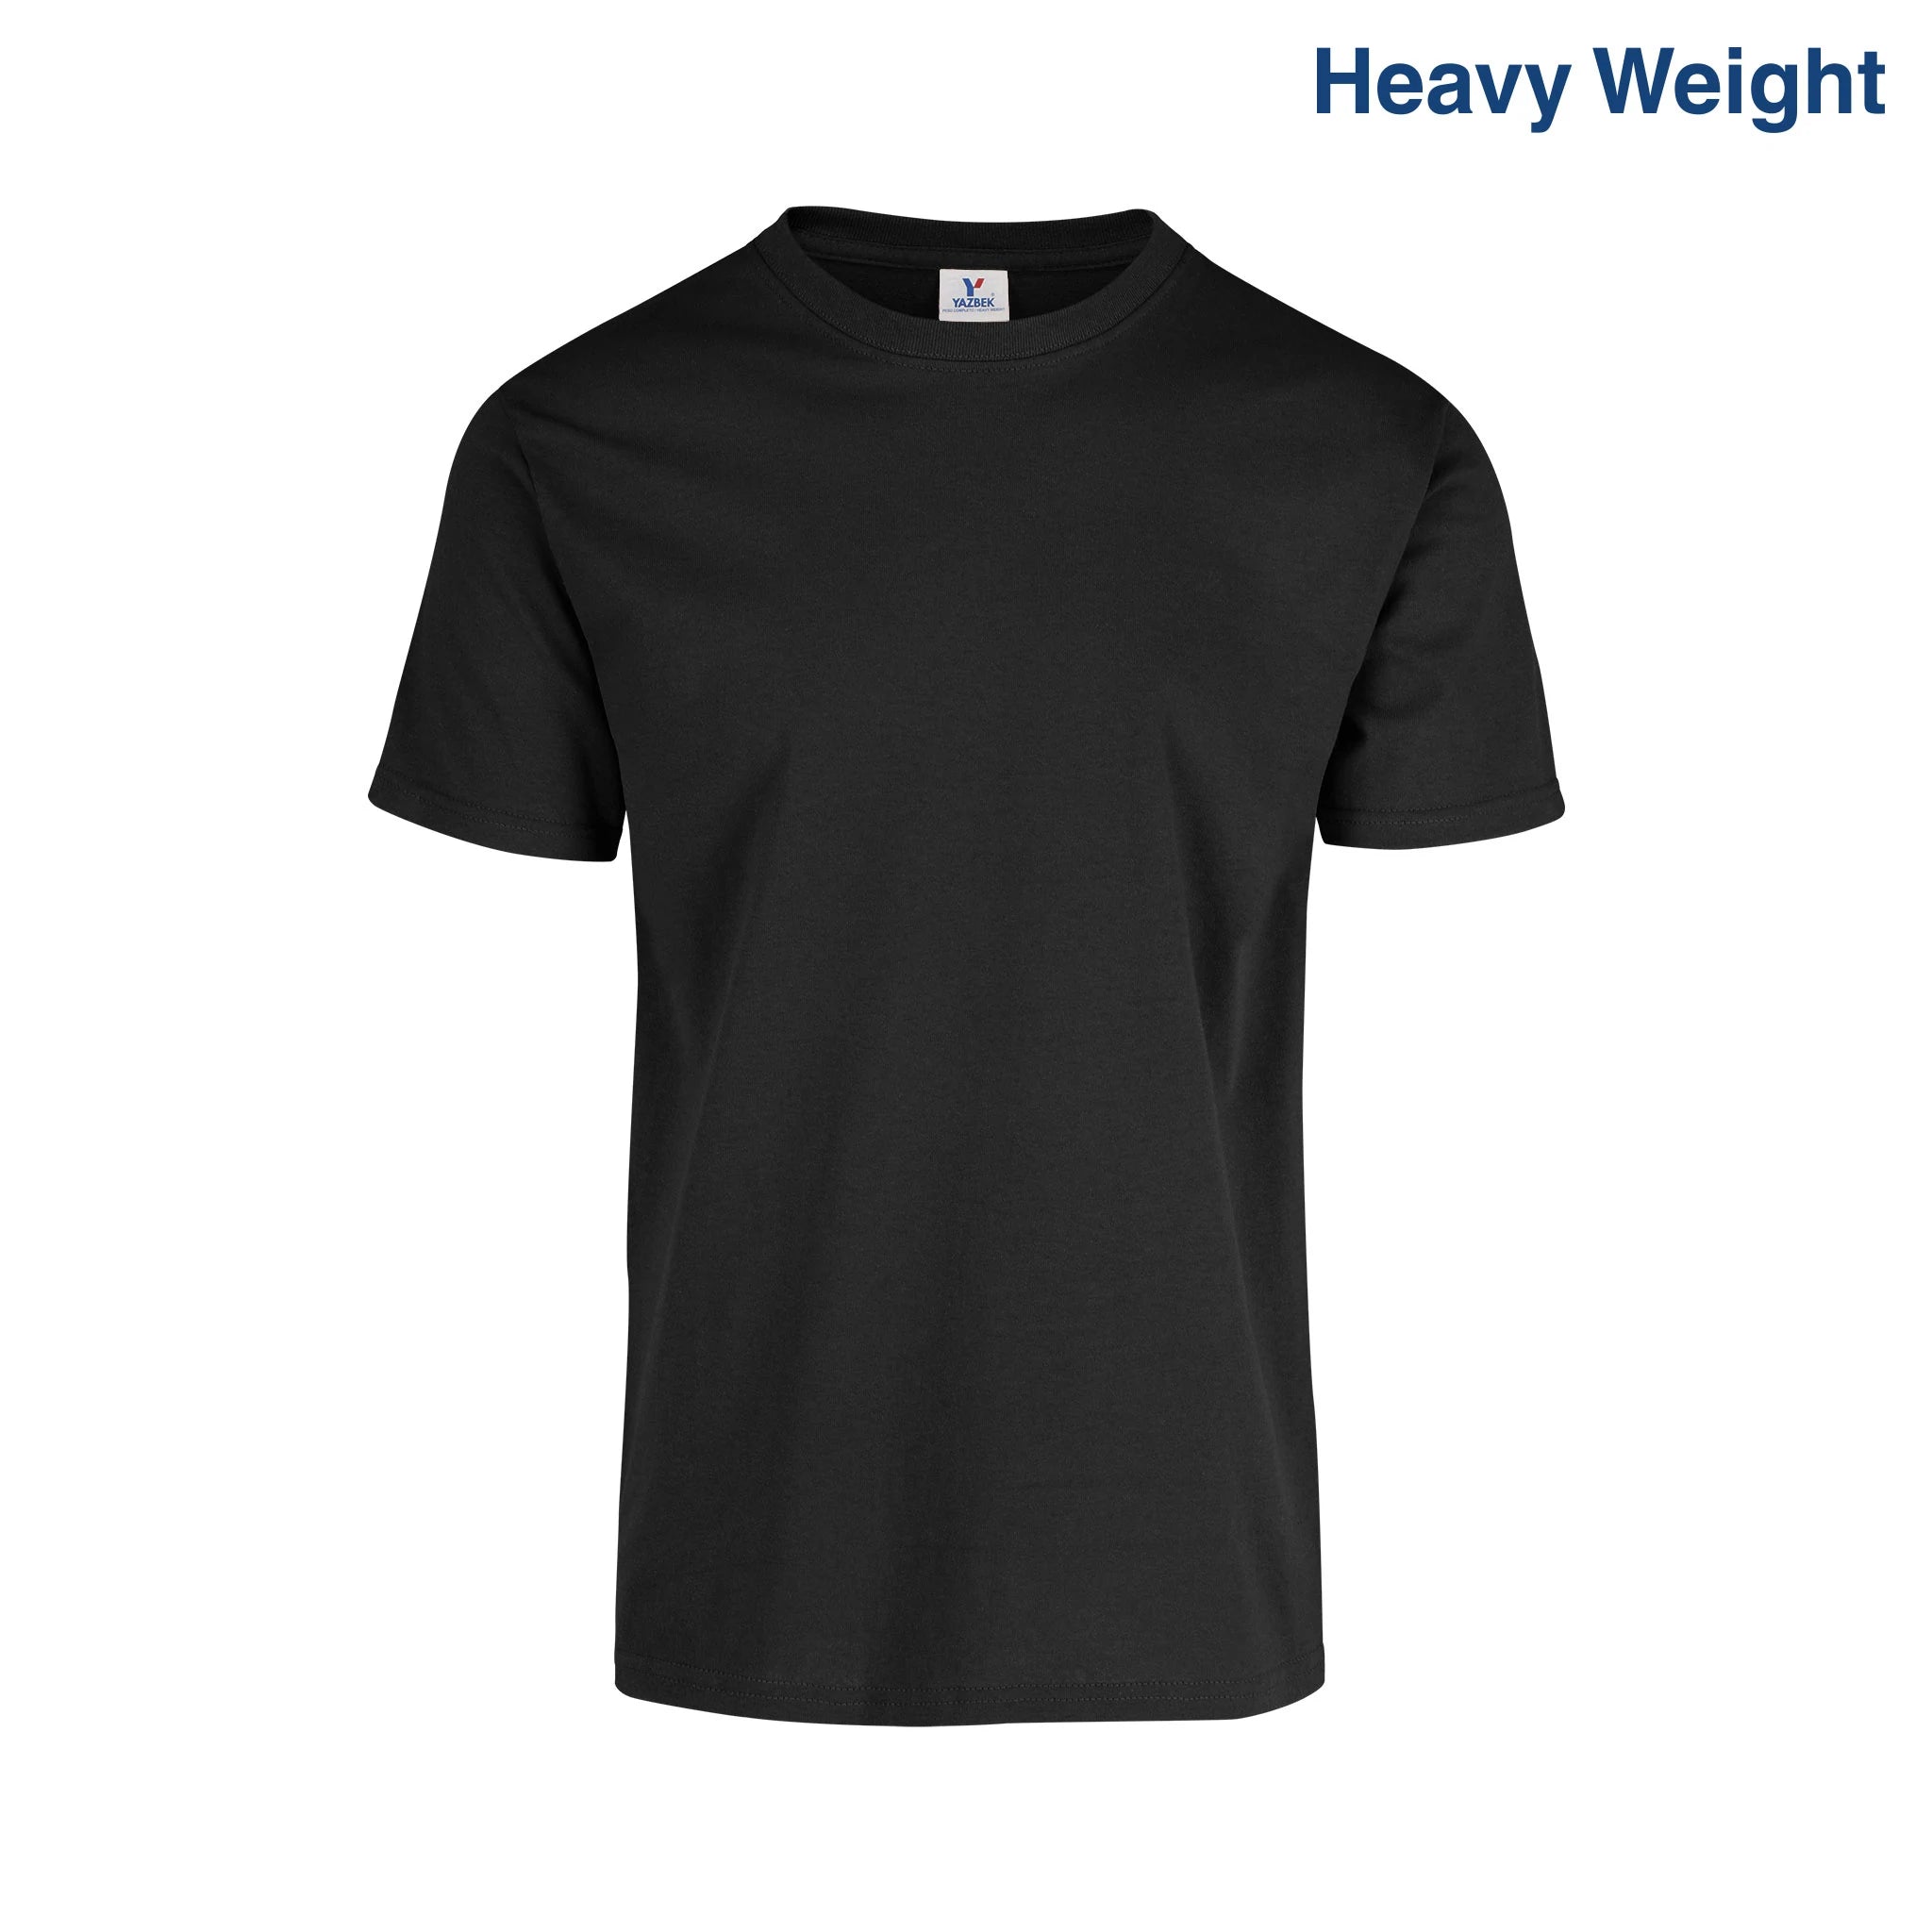 Black Heavy Weight Short Sleeve T-shirt by Yazbek 